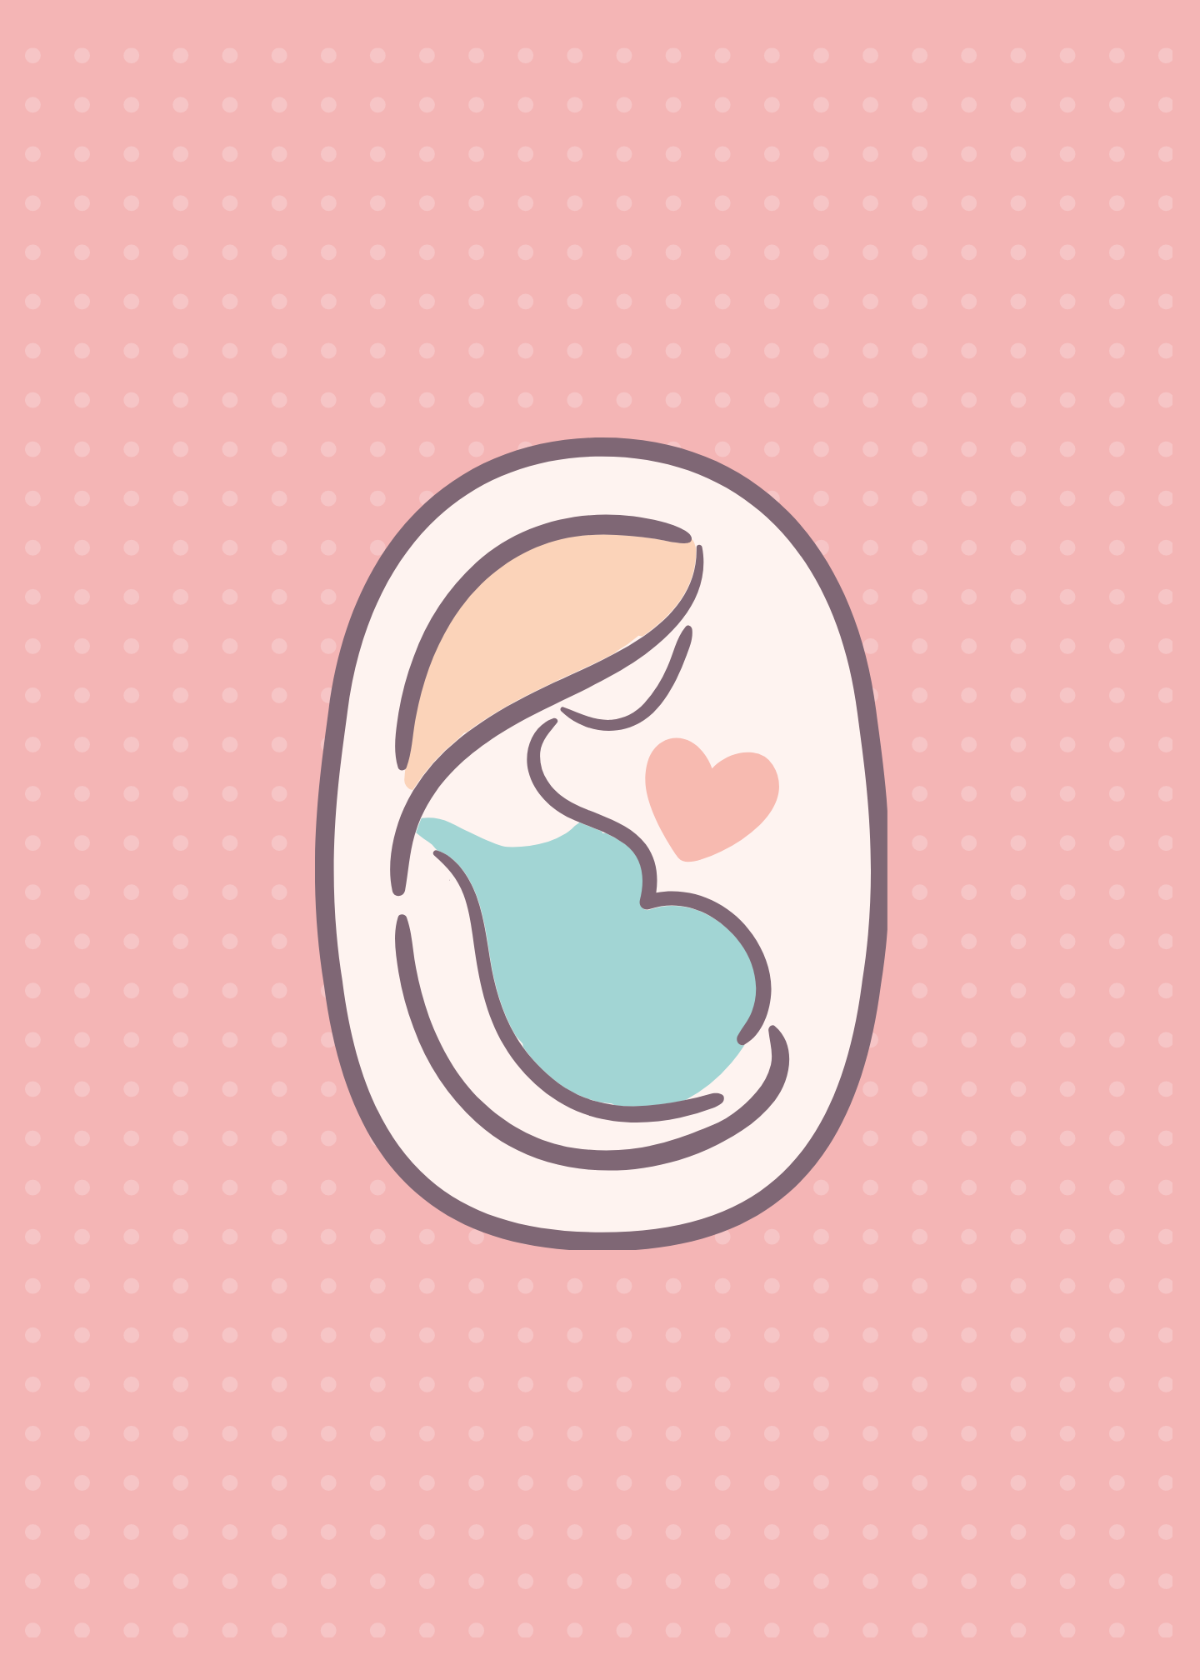 Pregnancy Announcement Card Template